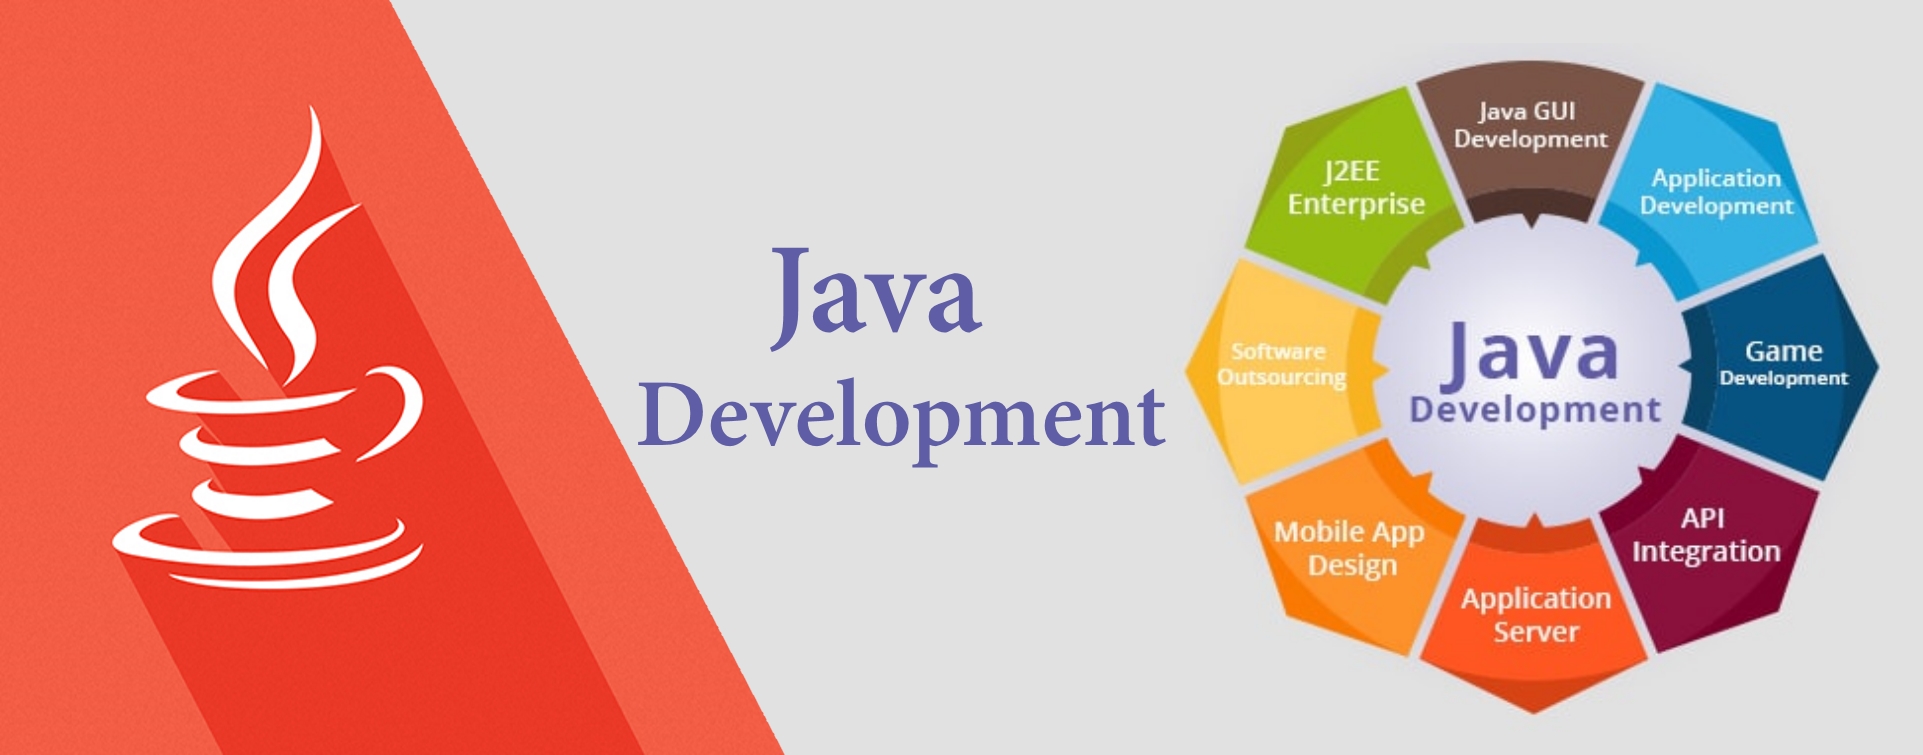 application development content for website